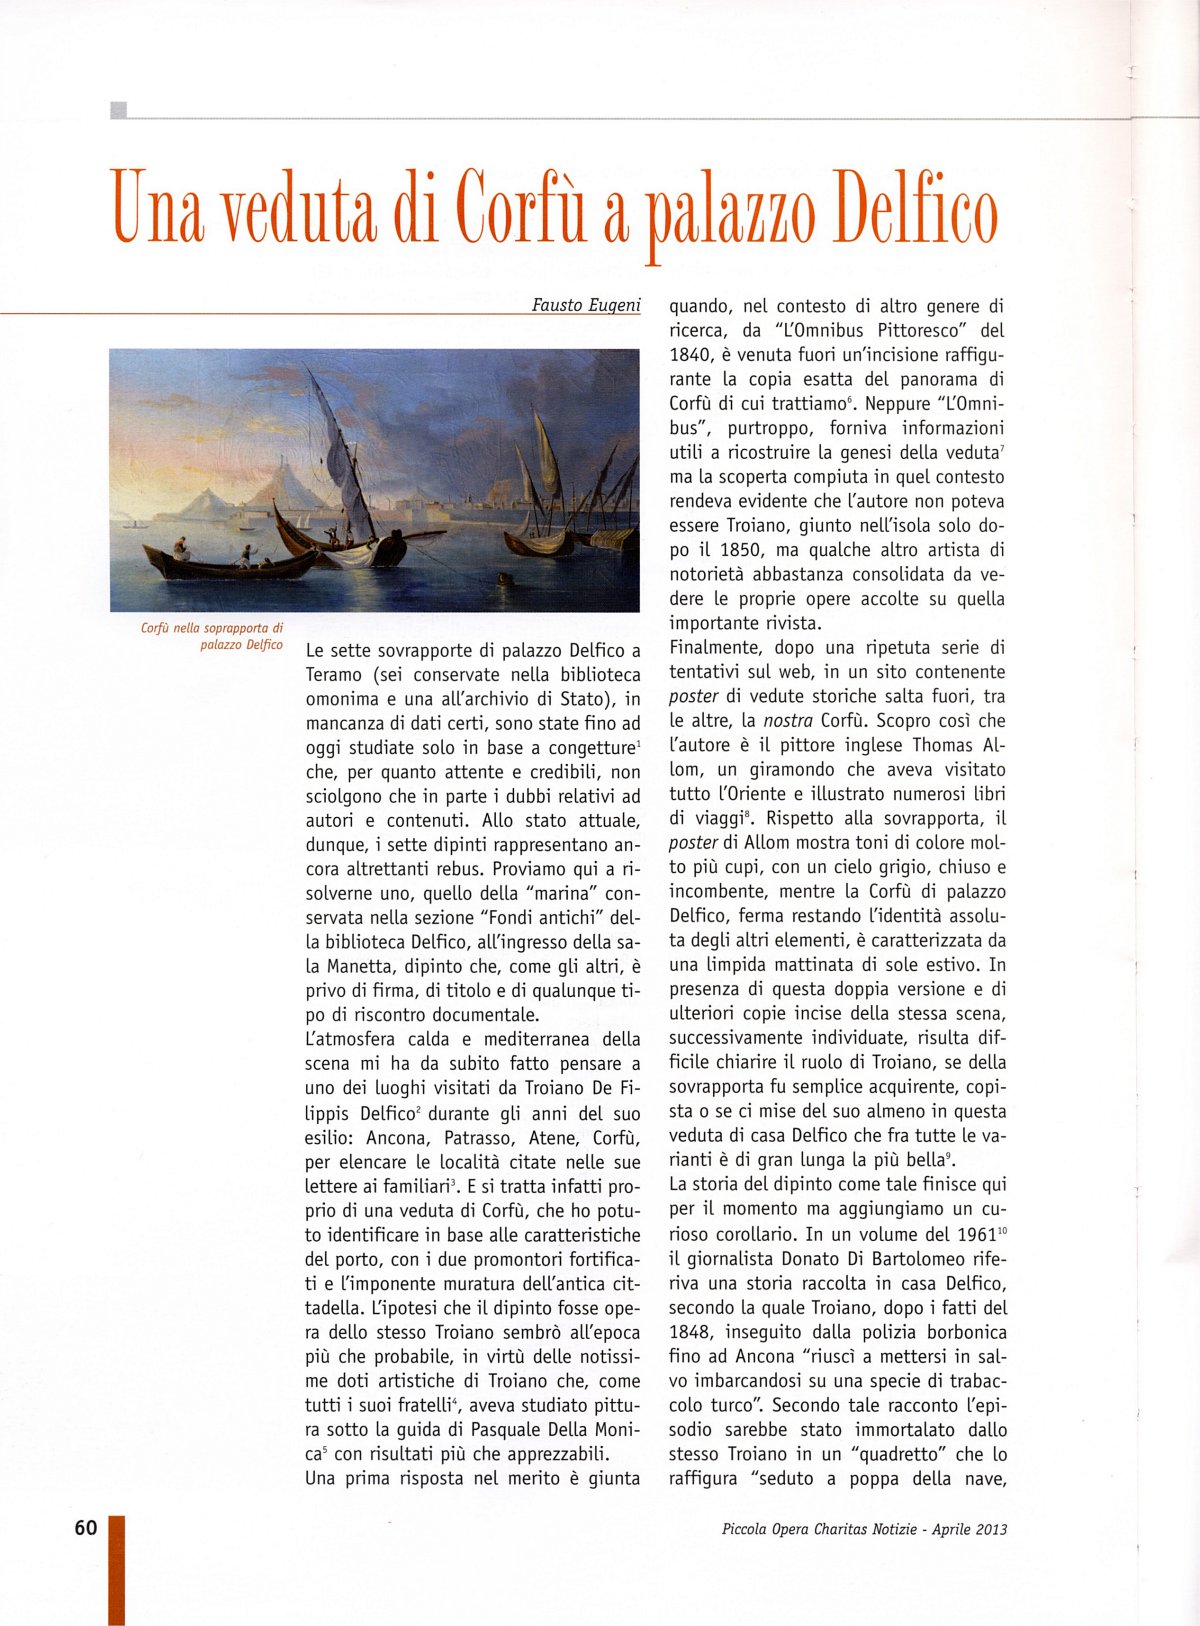 Piccola Opera Charitas, anno XIII, n. 1, gennaio-aprile 2013, pag. 60